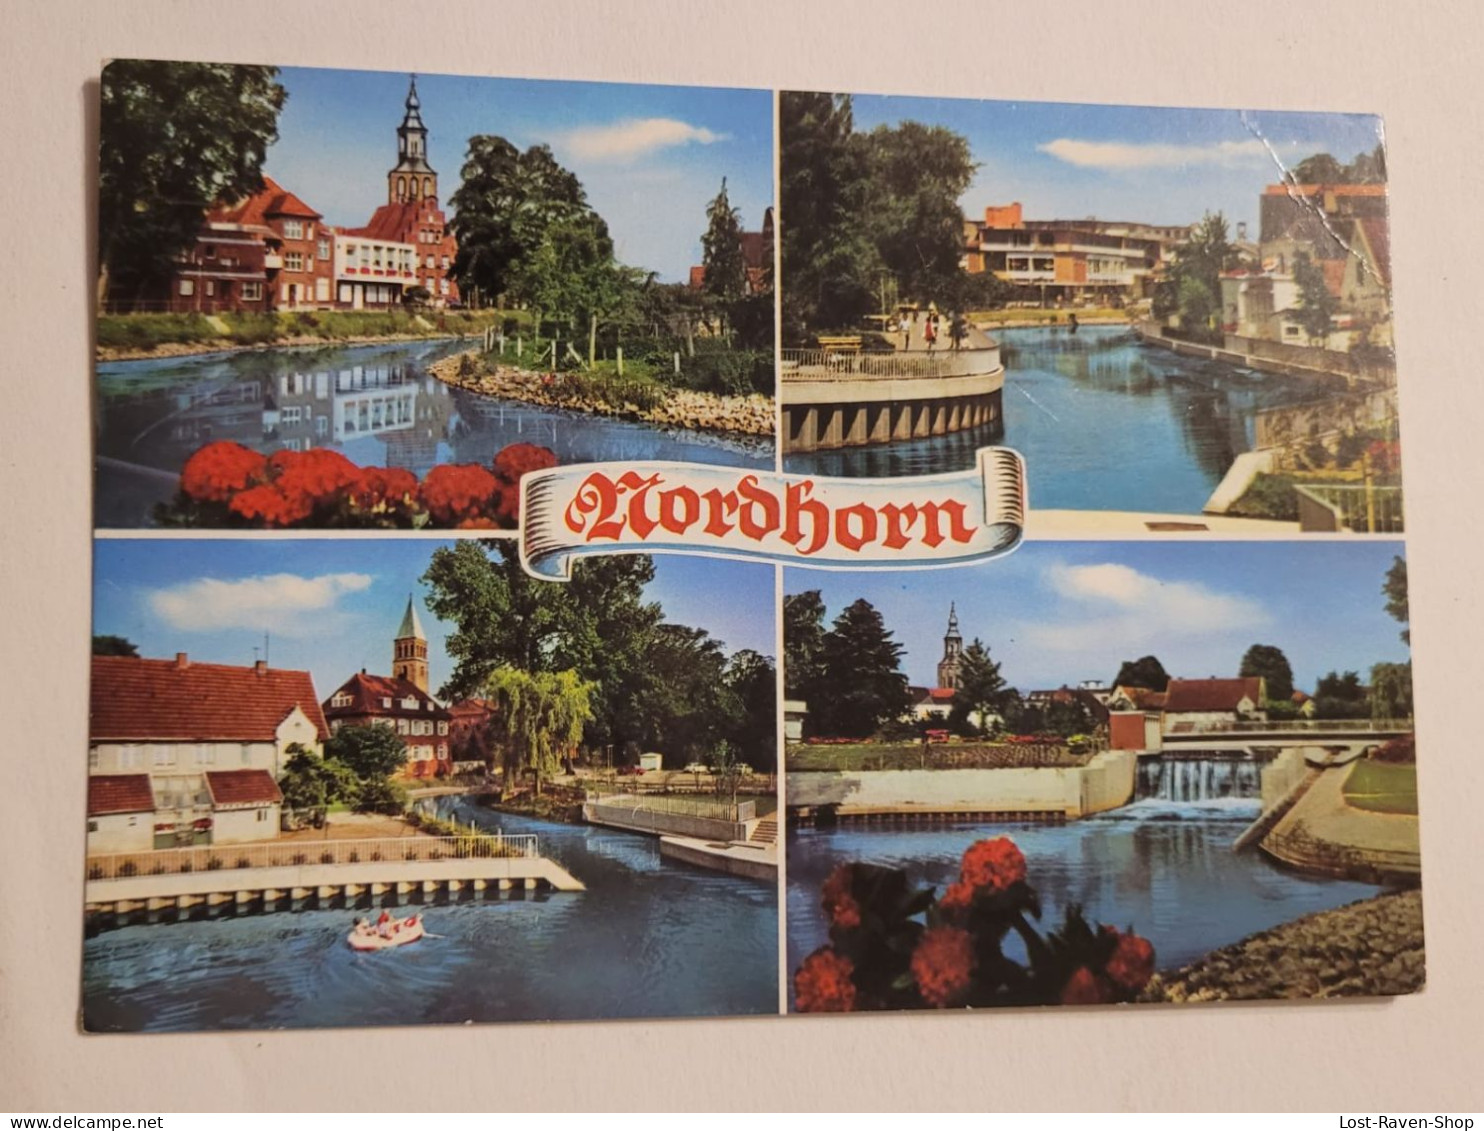 Nordhorn - Nordhorn